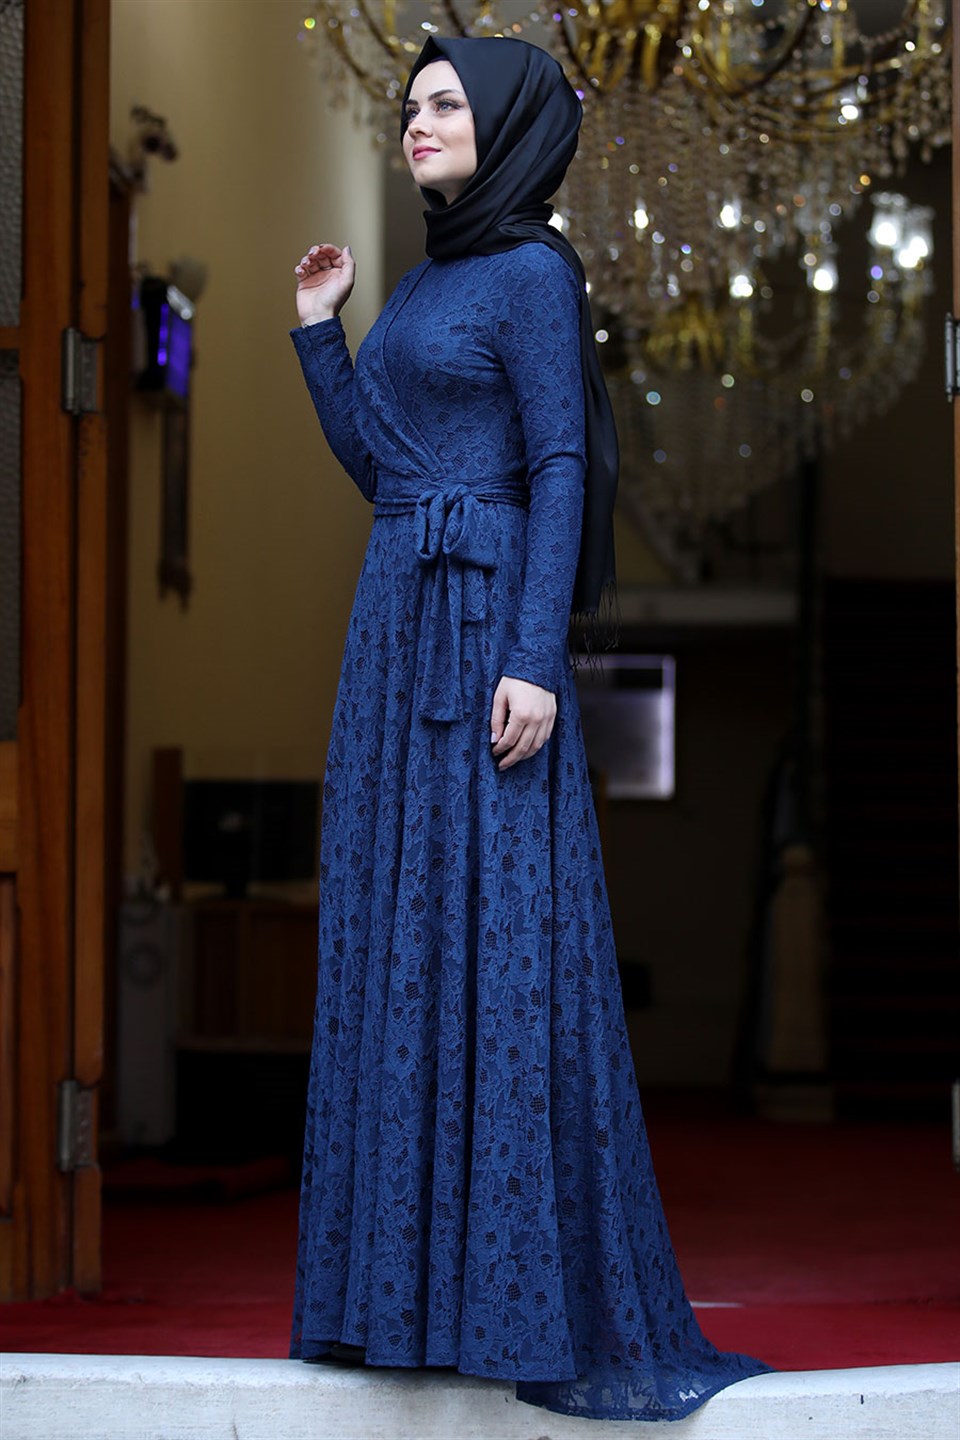 Dress - Lace - Lined - High Collar - Indigo Blue - AHN20 | Modavina